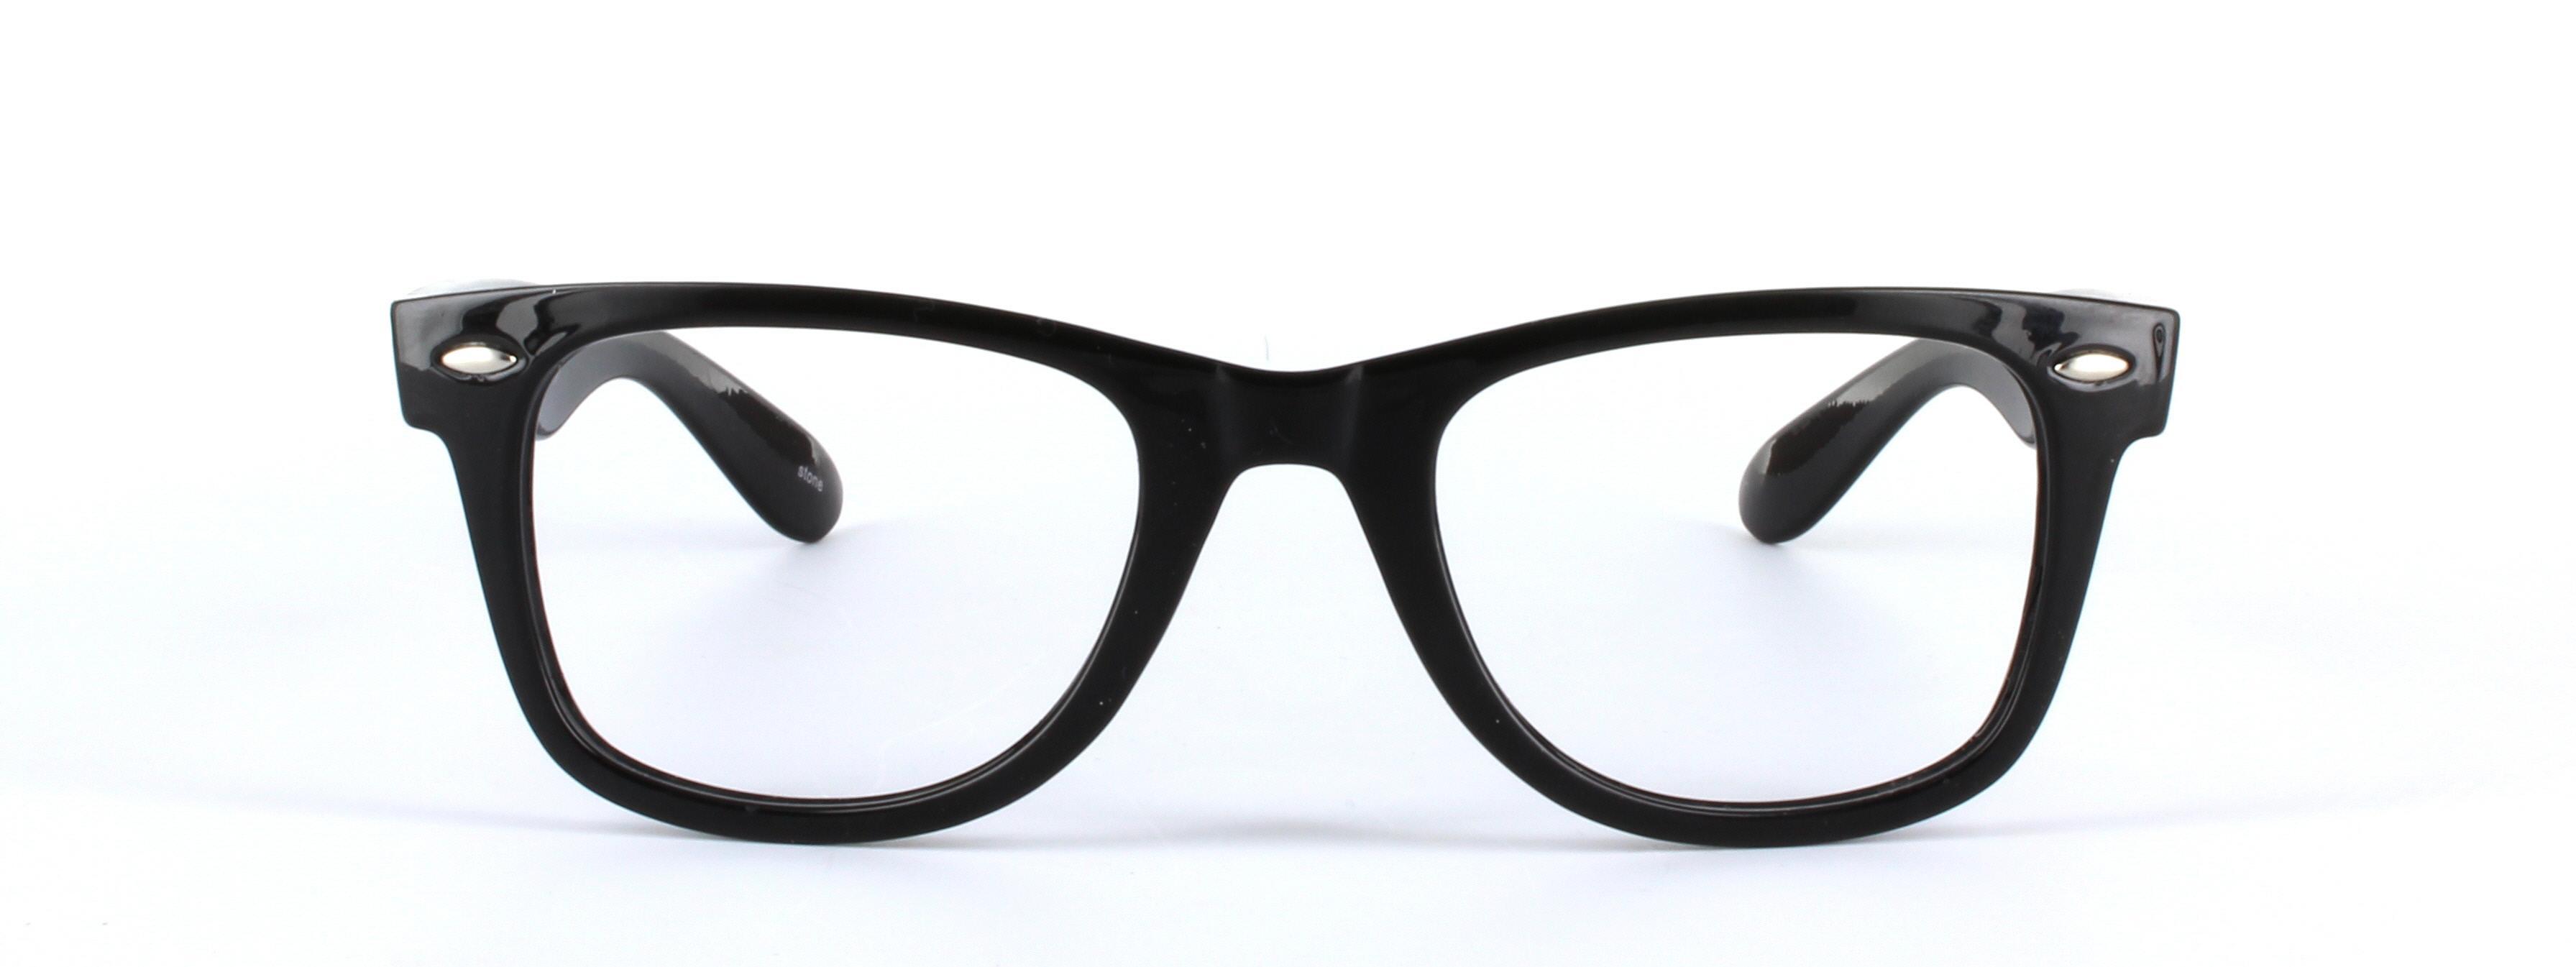 Black Full Rim Oval Plastic Glasses England - Image View 5